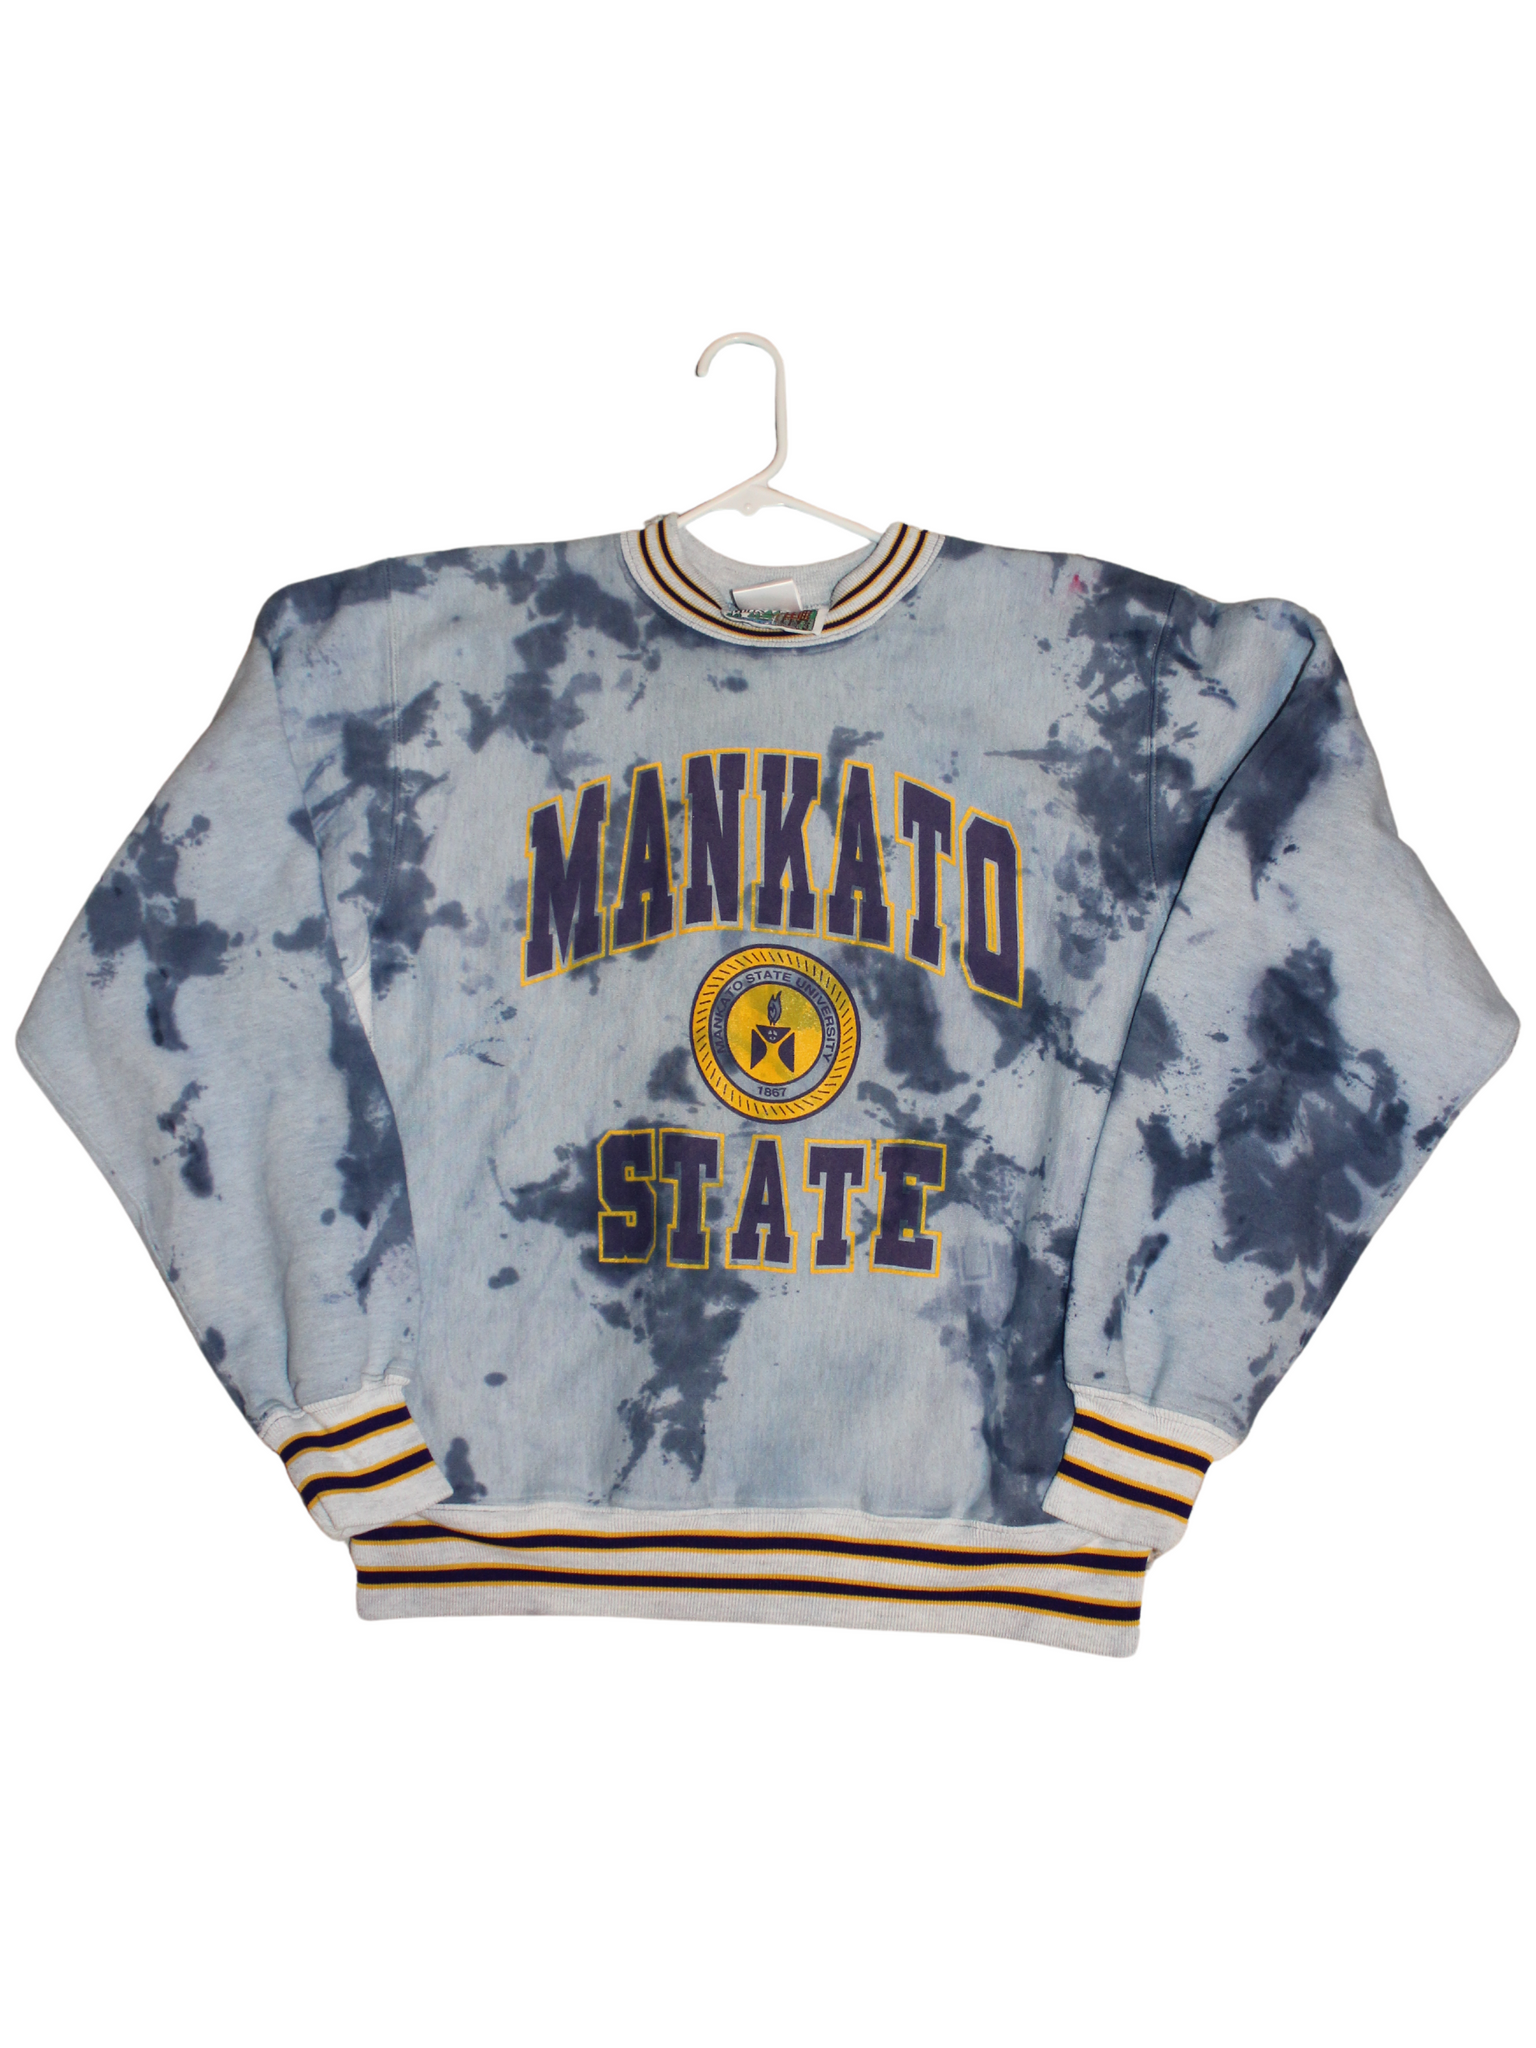 Vintage Mankato State Tie Dye Sweatshirt